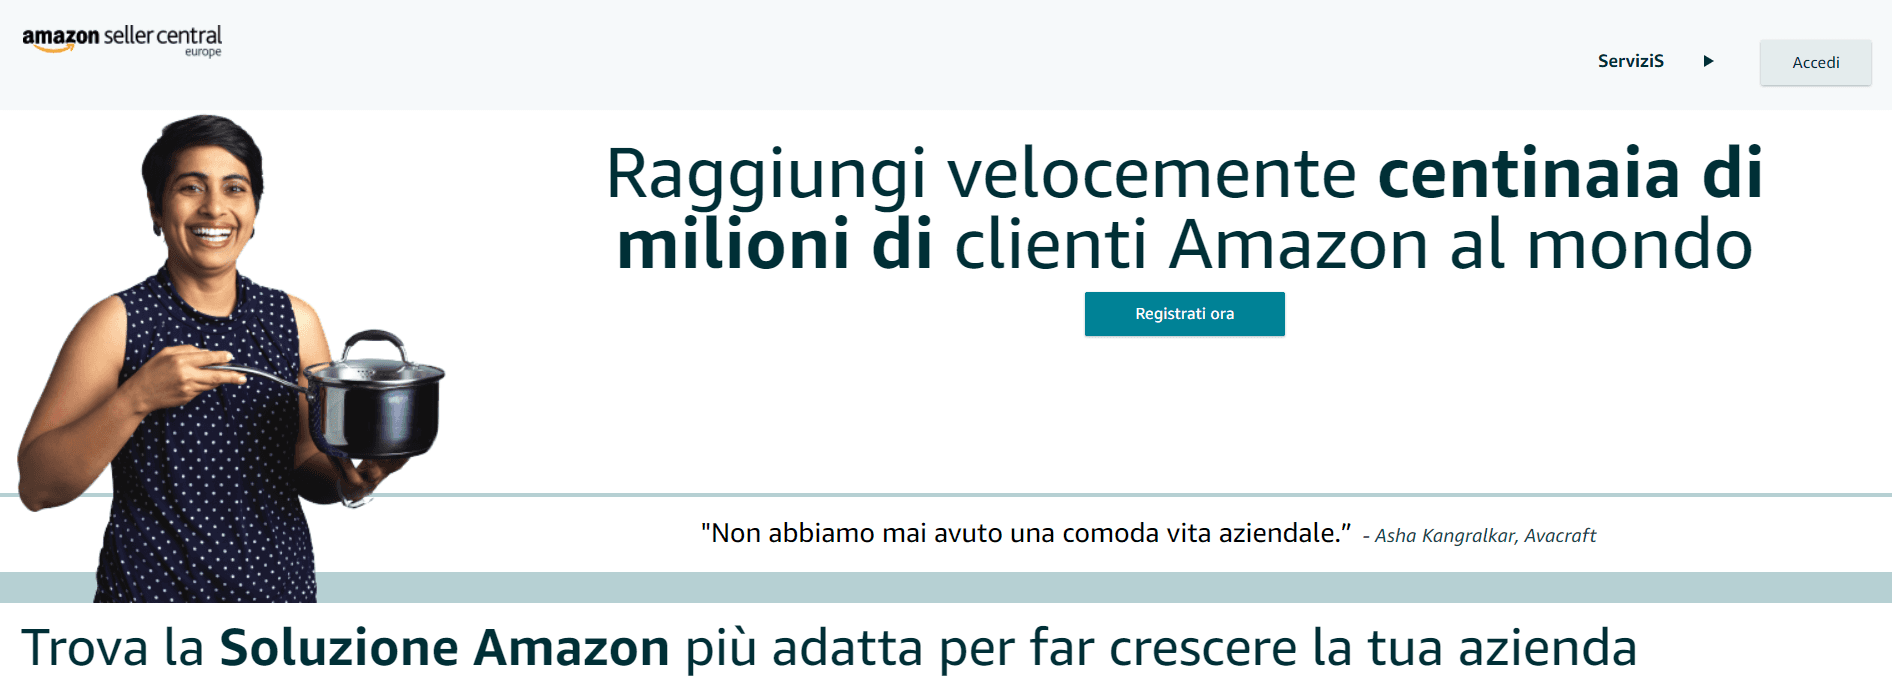 amazon e-commerce 2019 - seller central